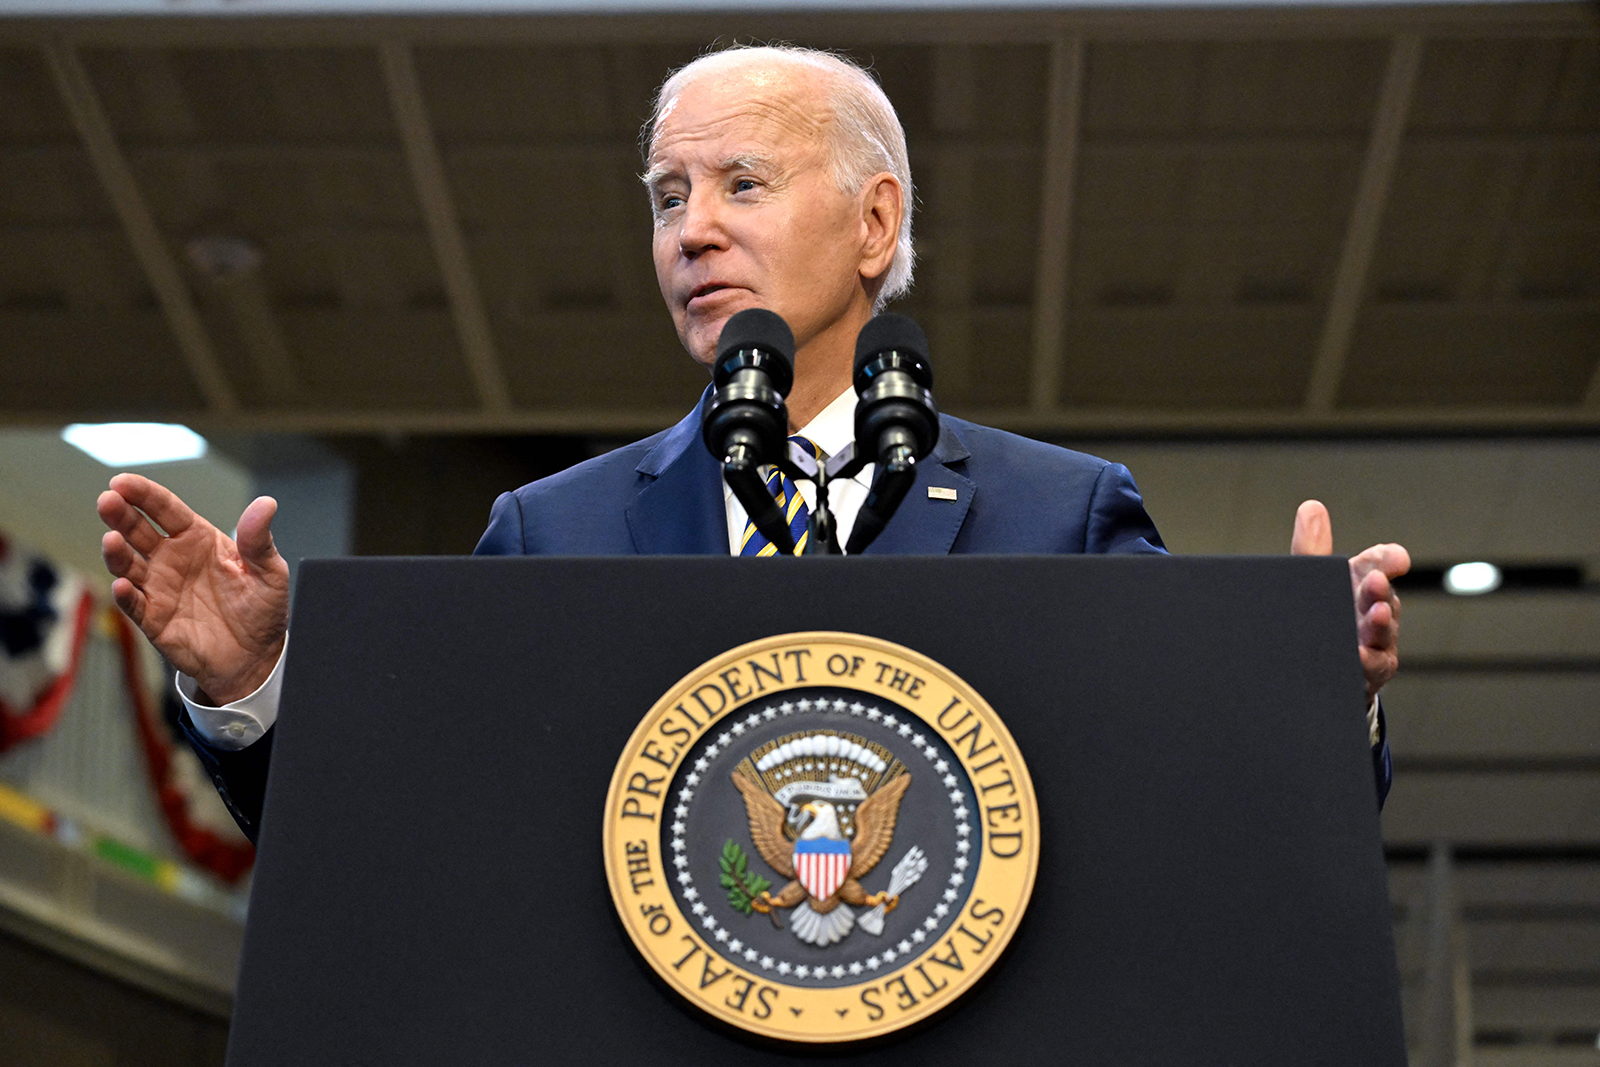 US President Joe Biden delivers remarks on his "Bidenomics" economic agenda at Prince George's Community College in Largo, Maryland, on September 14.